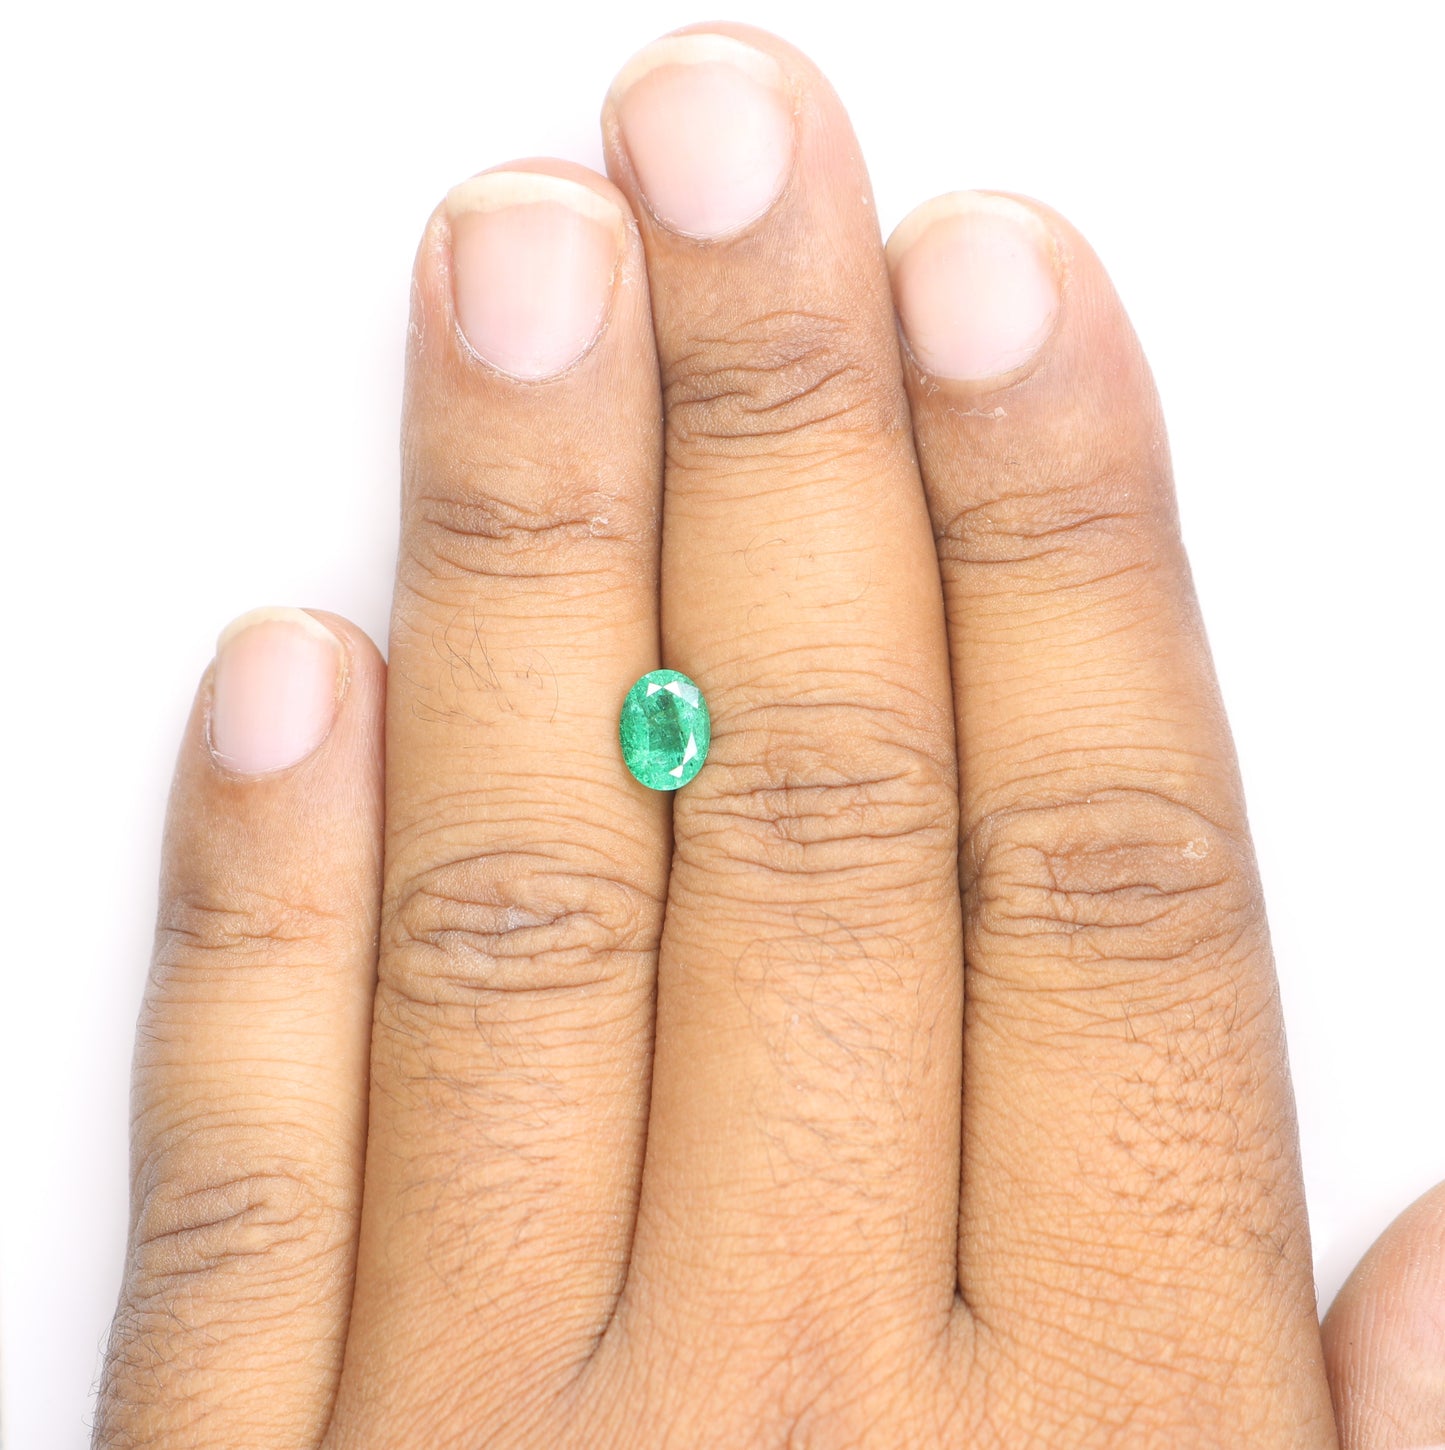 1.19 CT Oval Cut Beautiful Green Emerald Sapphire Gemstone For Wedding Ring